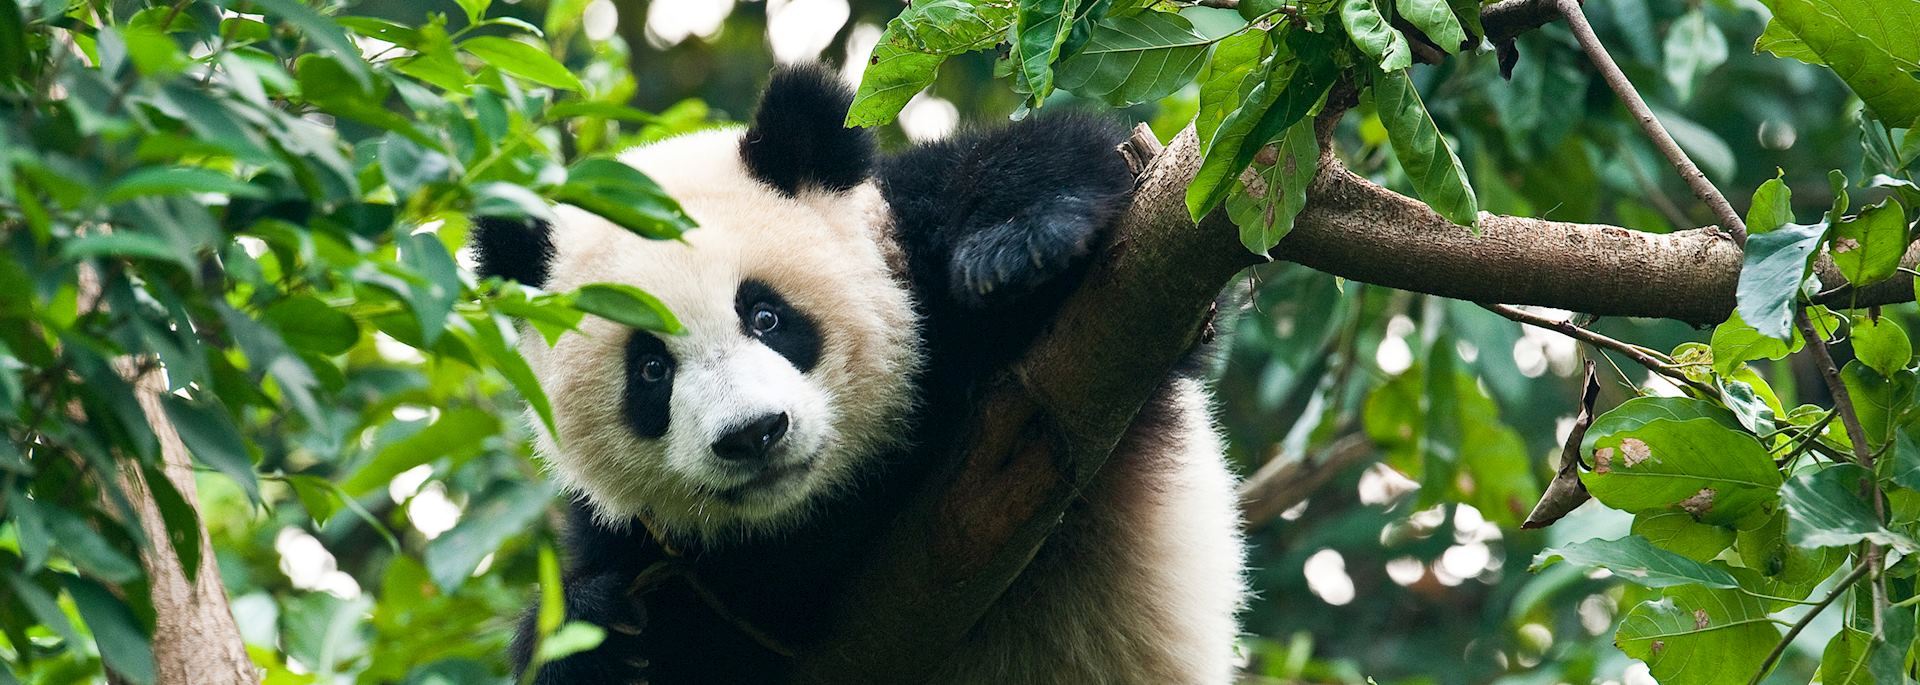 Giant panda climbing a tree